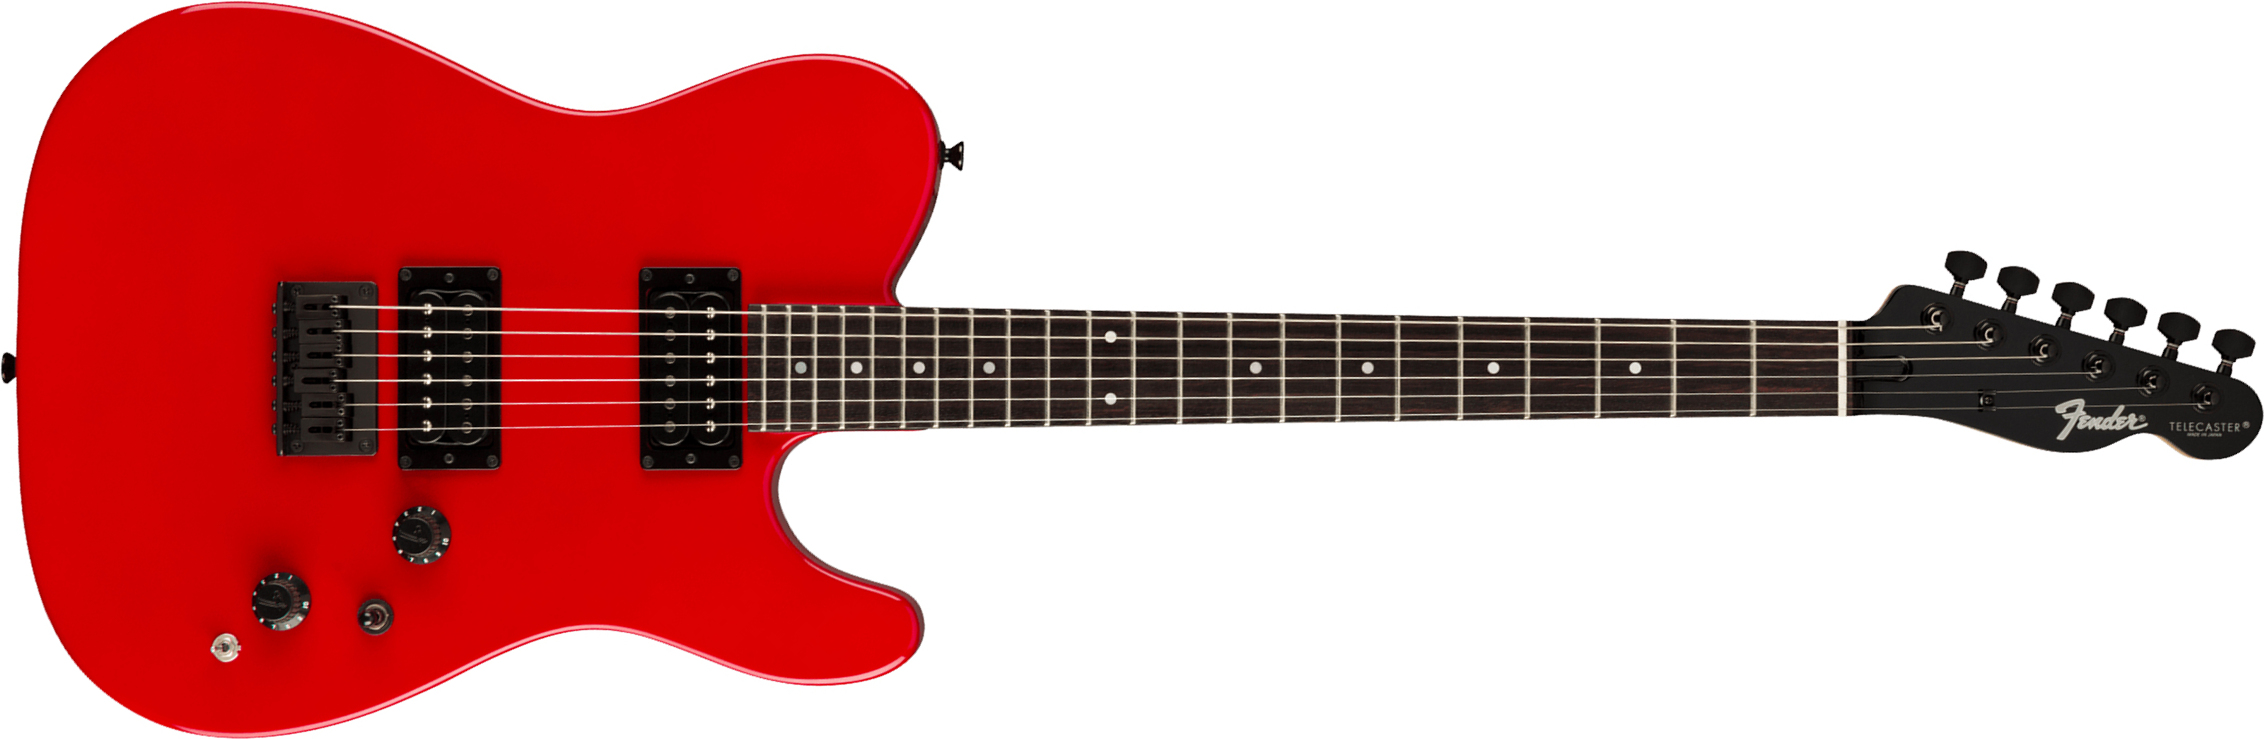 Fender Tele Boxer Hh Jap Ht Rw +housse - Torino Red - Televorm elektrische gitaar - Main picture